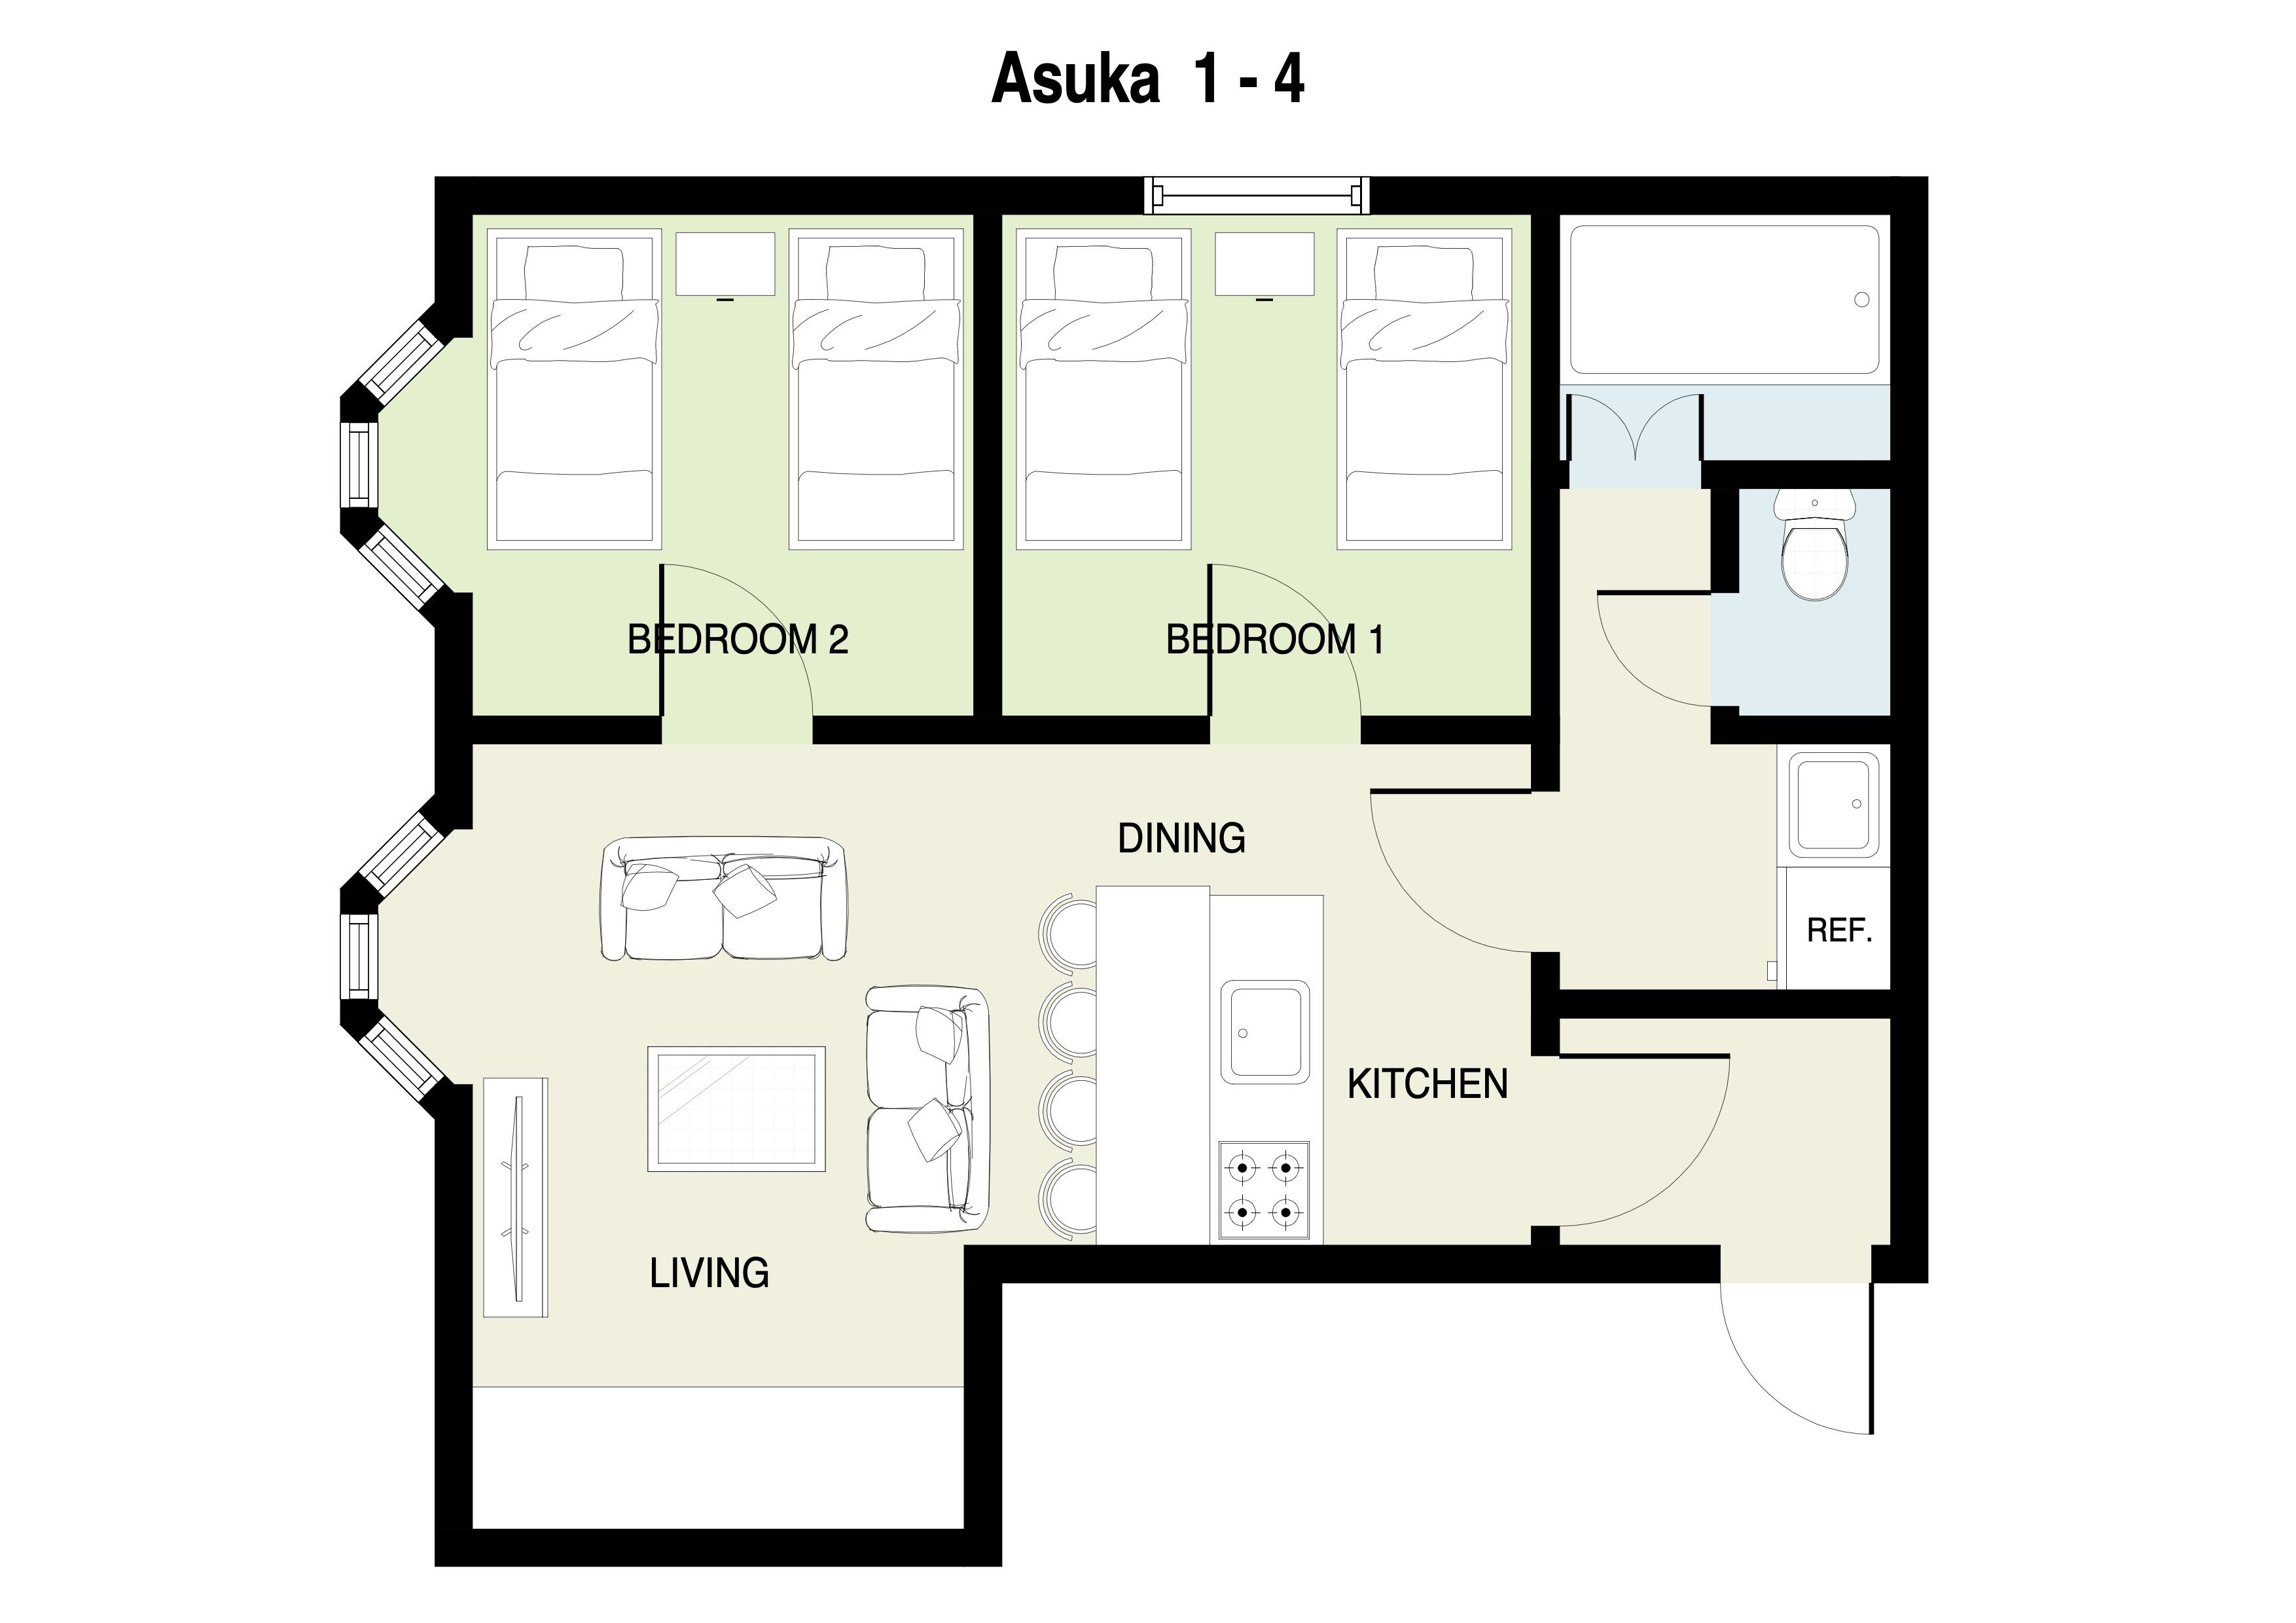 Asuka value floor plans